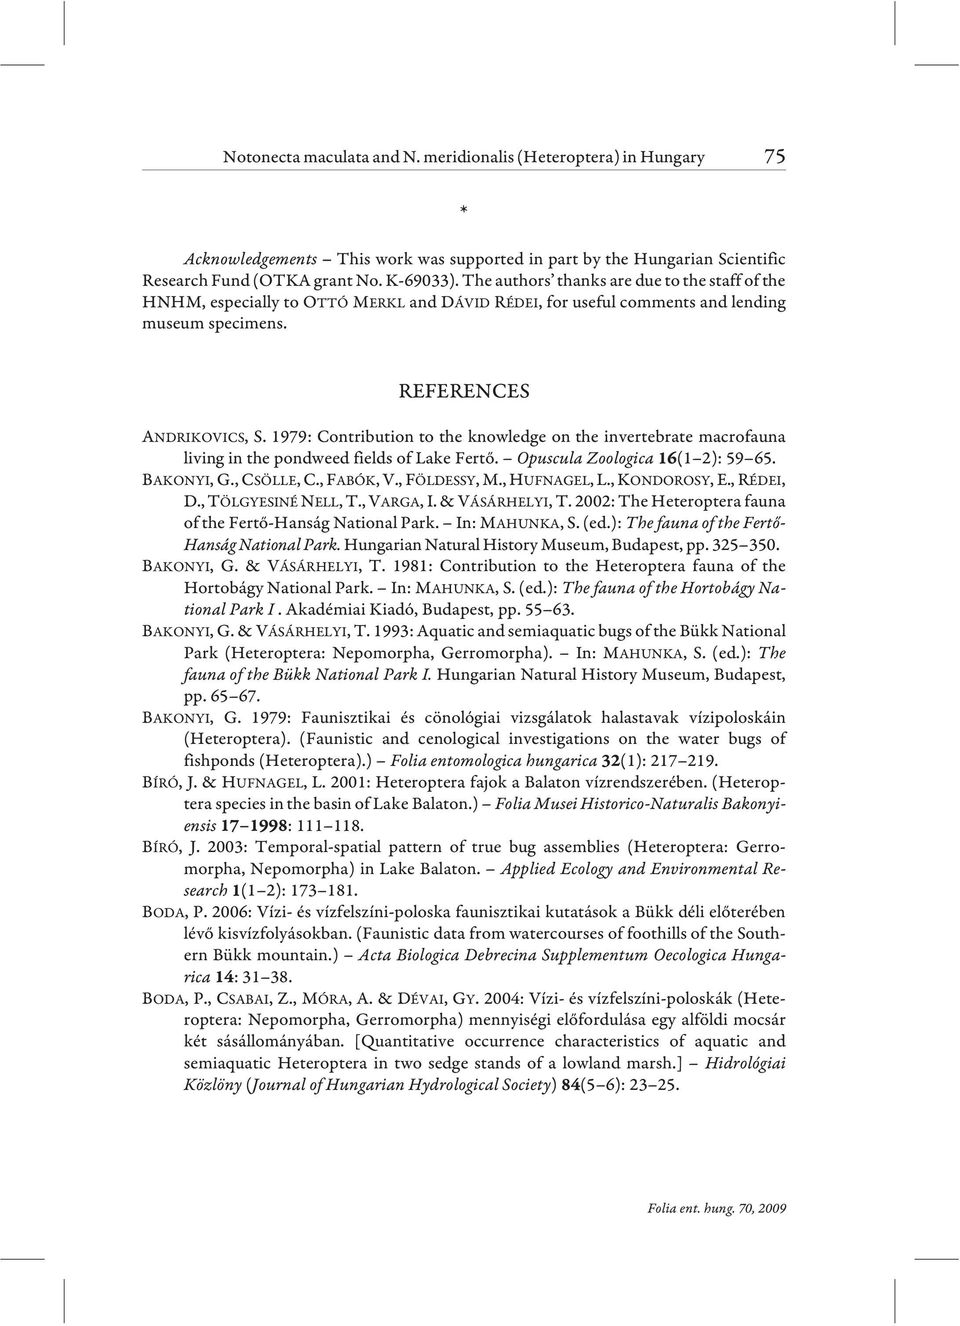 1979: Contribution to the knowledge on the invertebrate macrofauna living in the pondweed fields of Lake Fertõ. Opuscula Zoologica (1 2): 59 65. BAKONYI, G., CSÖLLE,C.,FABÓK,V.,FÖLDESSY,M.,HUFNAGEL,L.